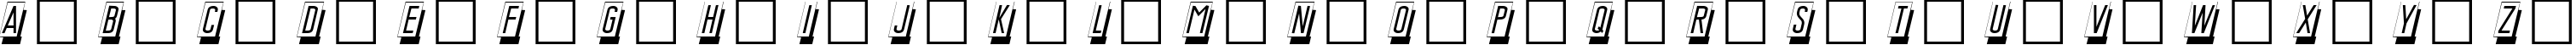 Пример написания английского алфавита шрифтом DG_MasterCard